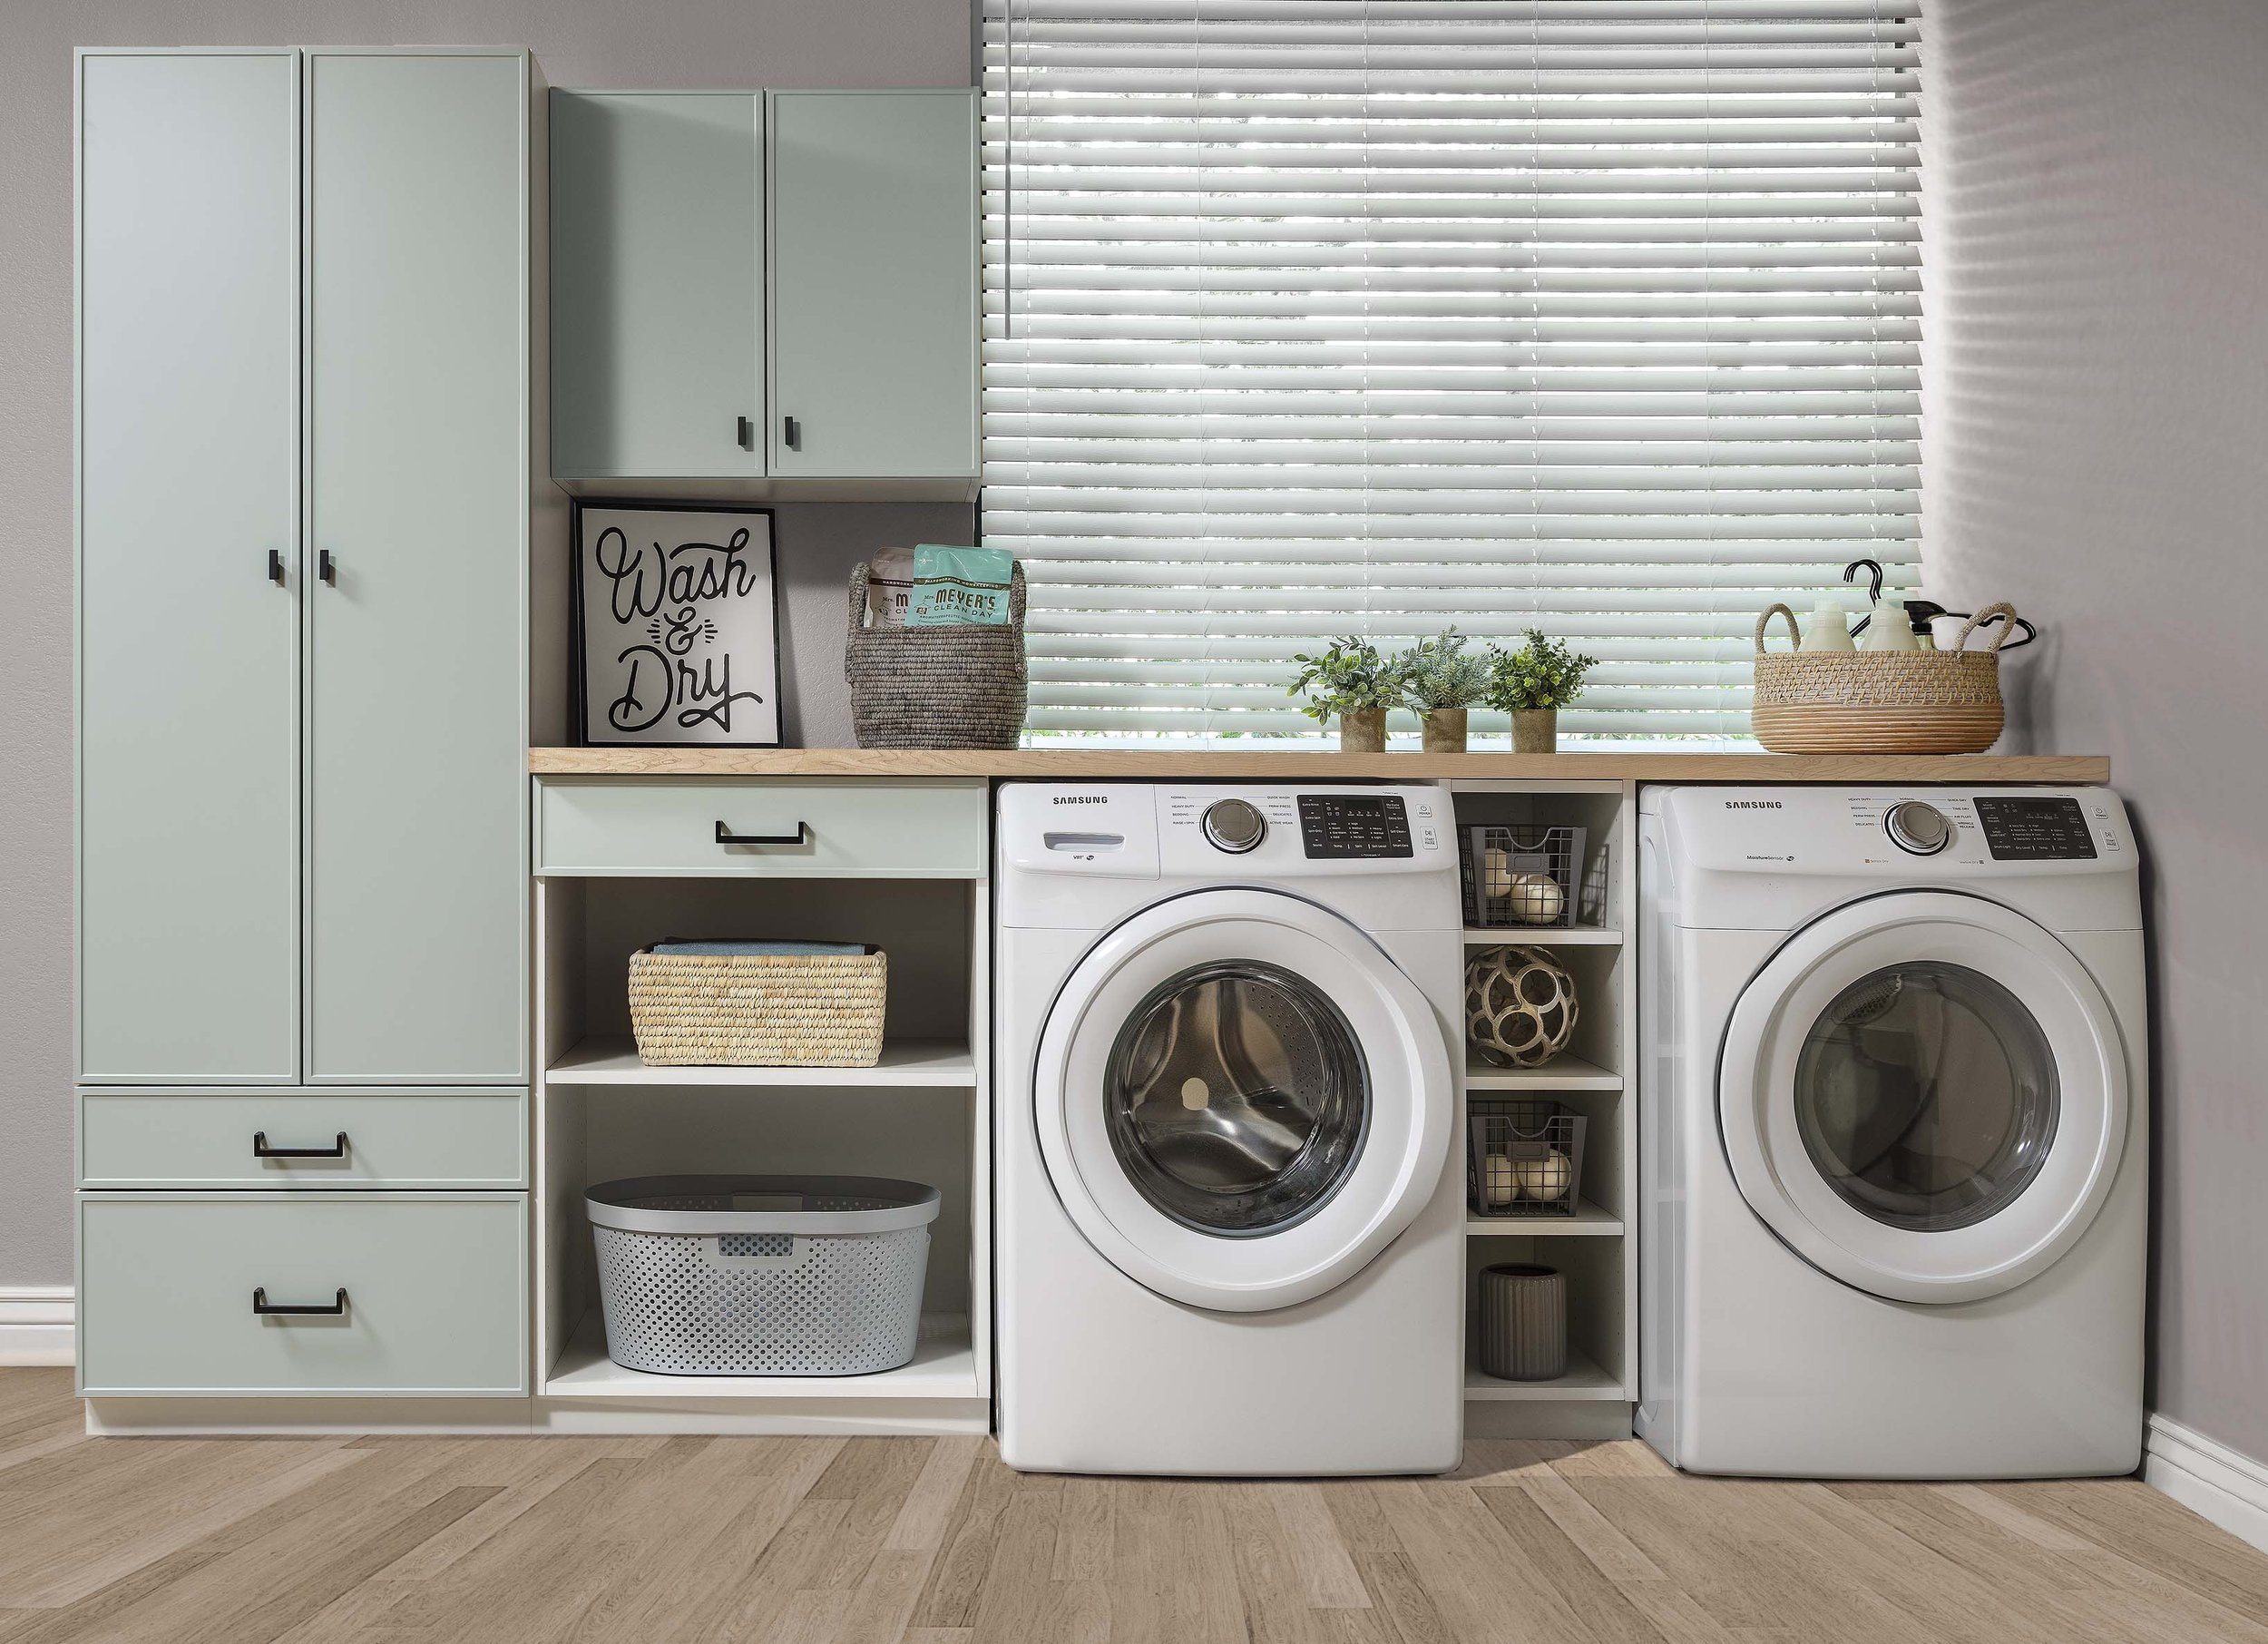   Classic Styles   Laundry Room Design    918.609.0214   